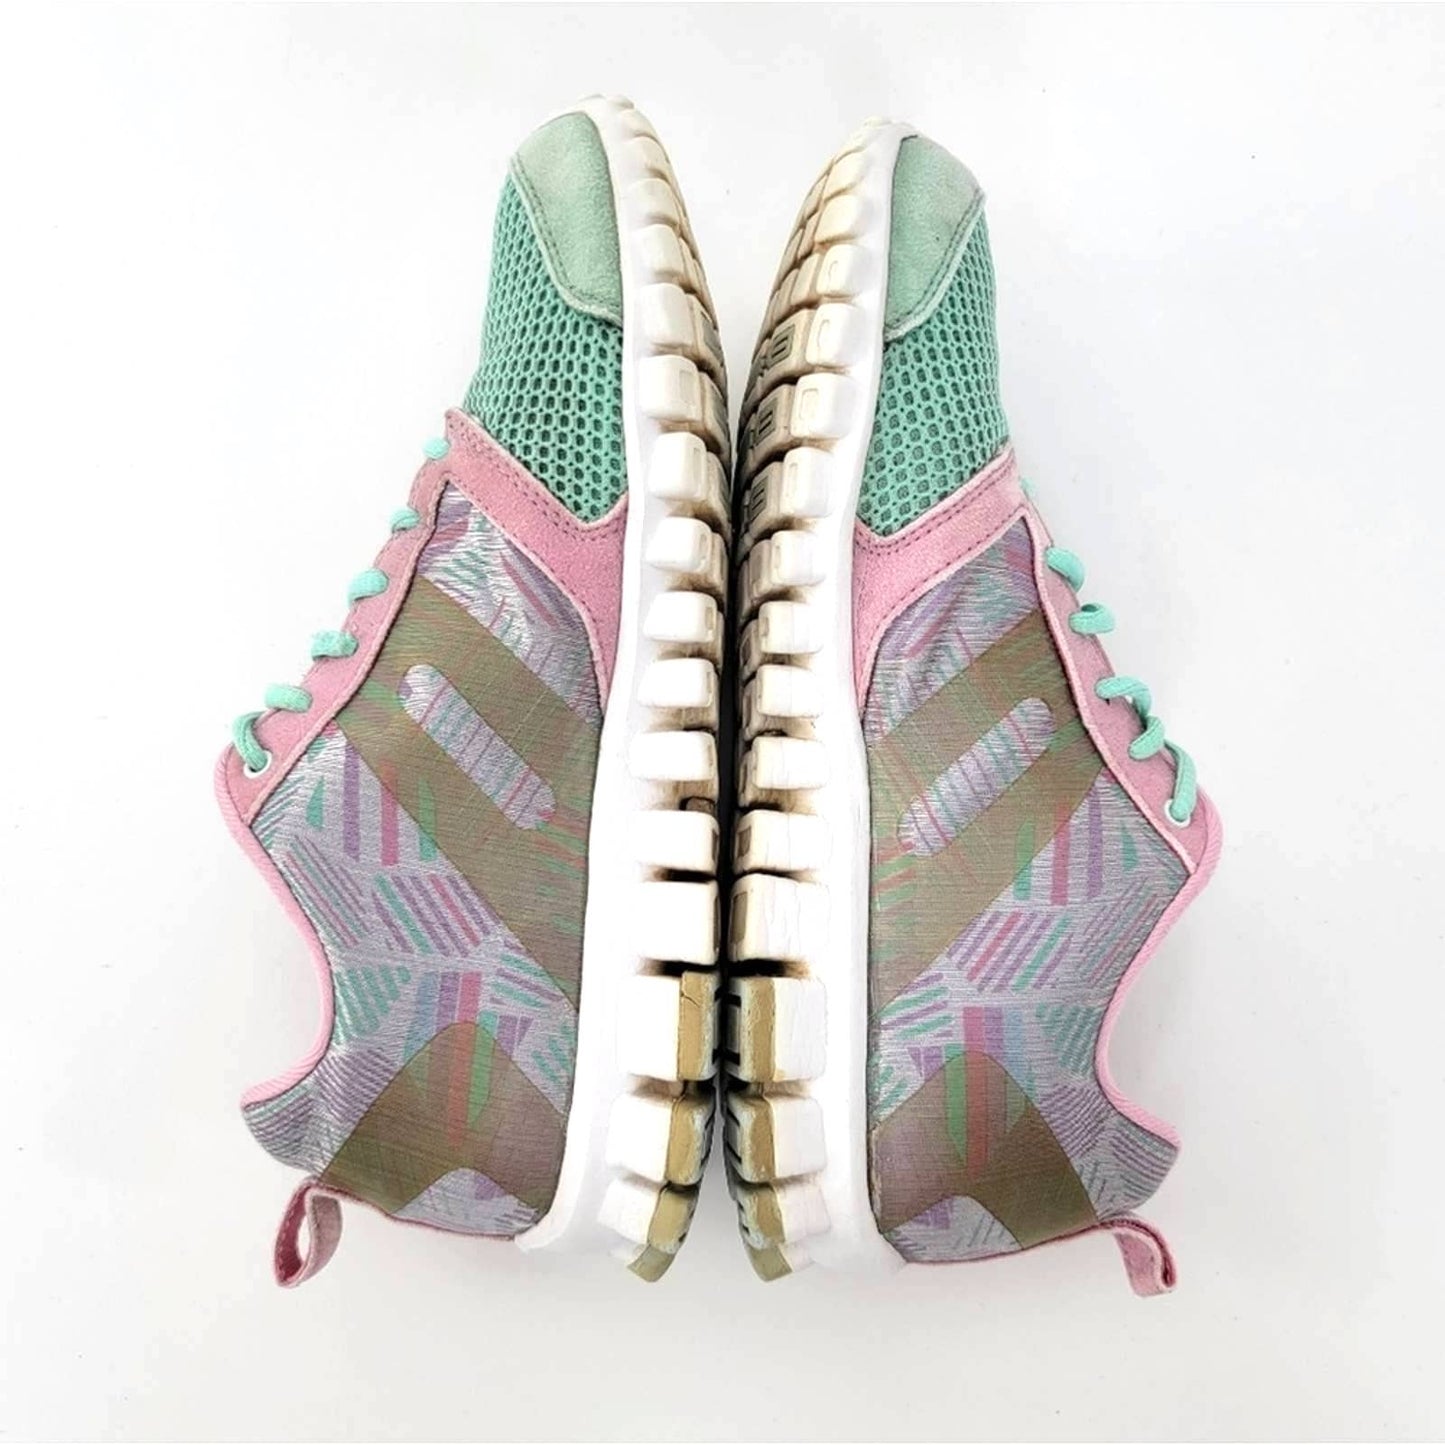 Reebok Realflex SmoothFlex CushRun Cotton Candy Lace Up Athletic Sneakers